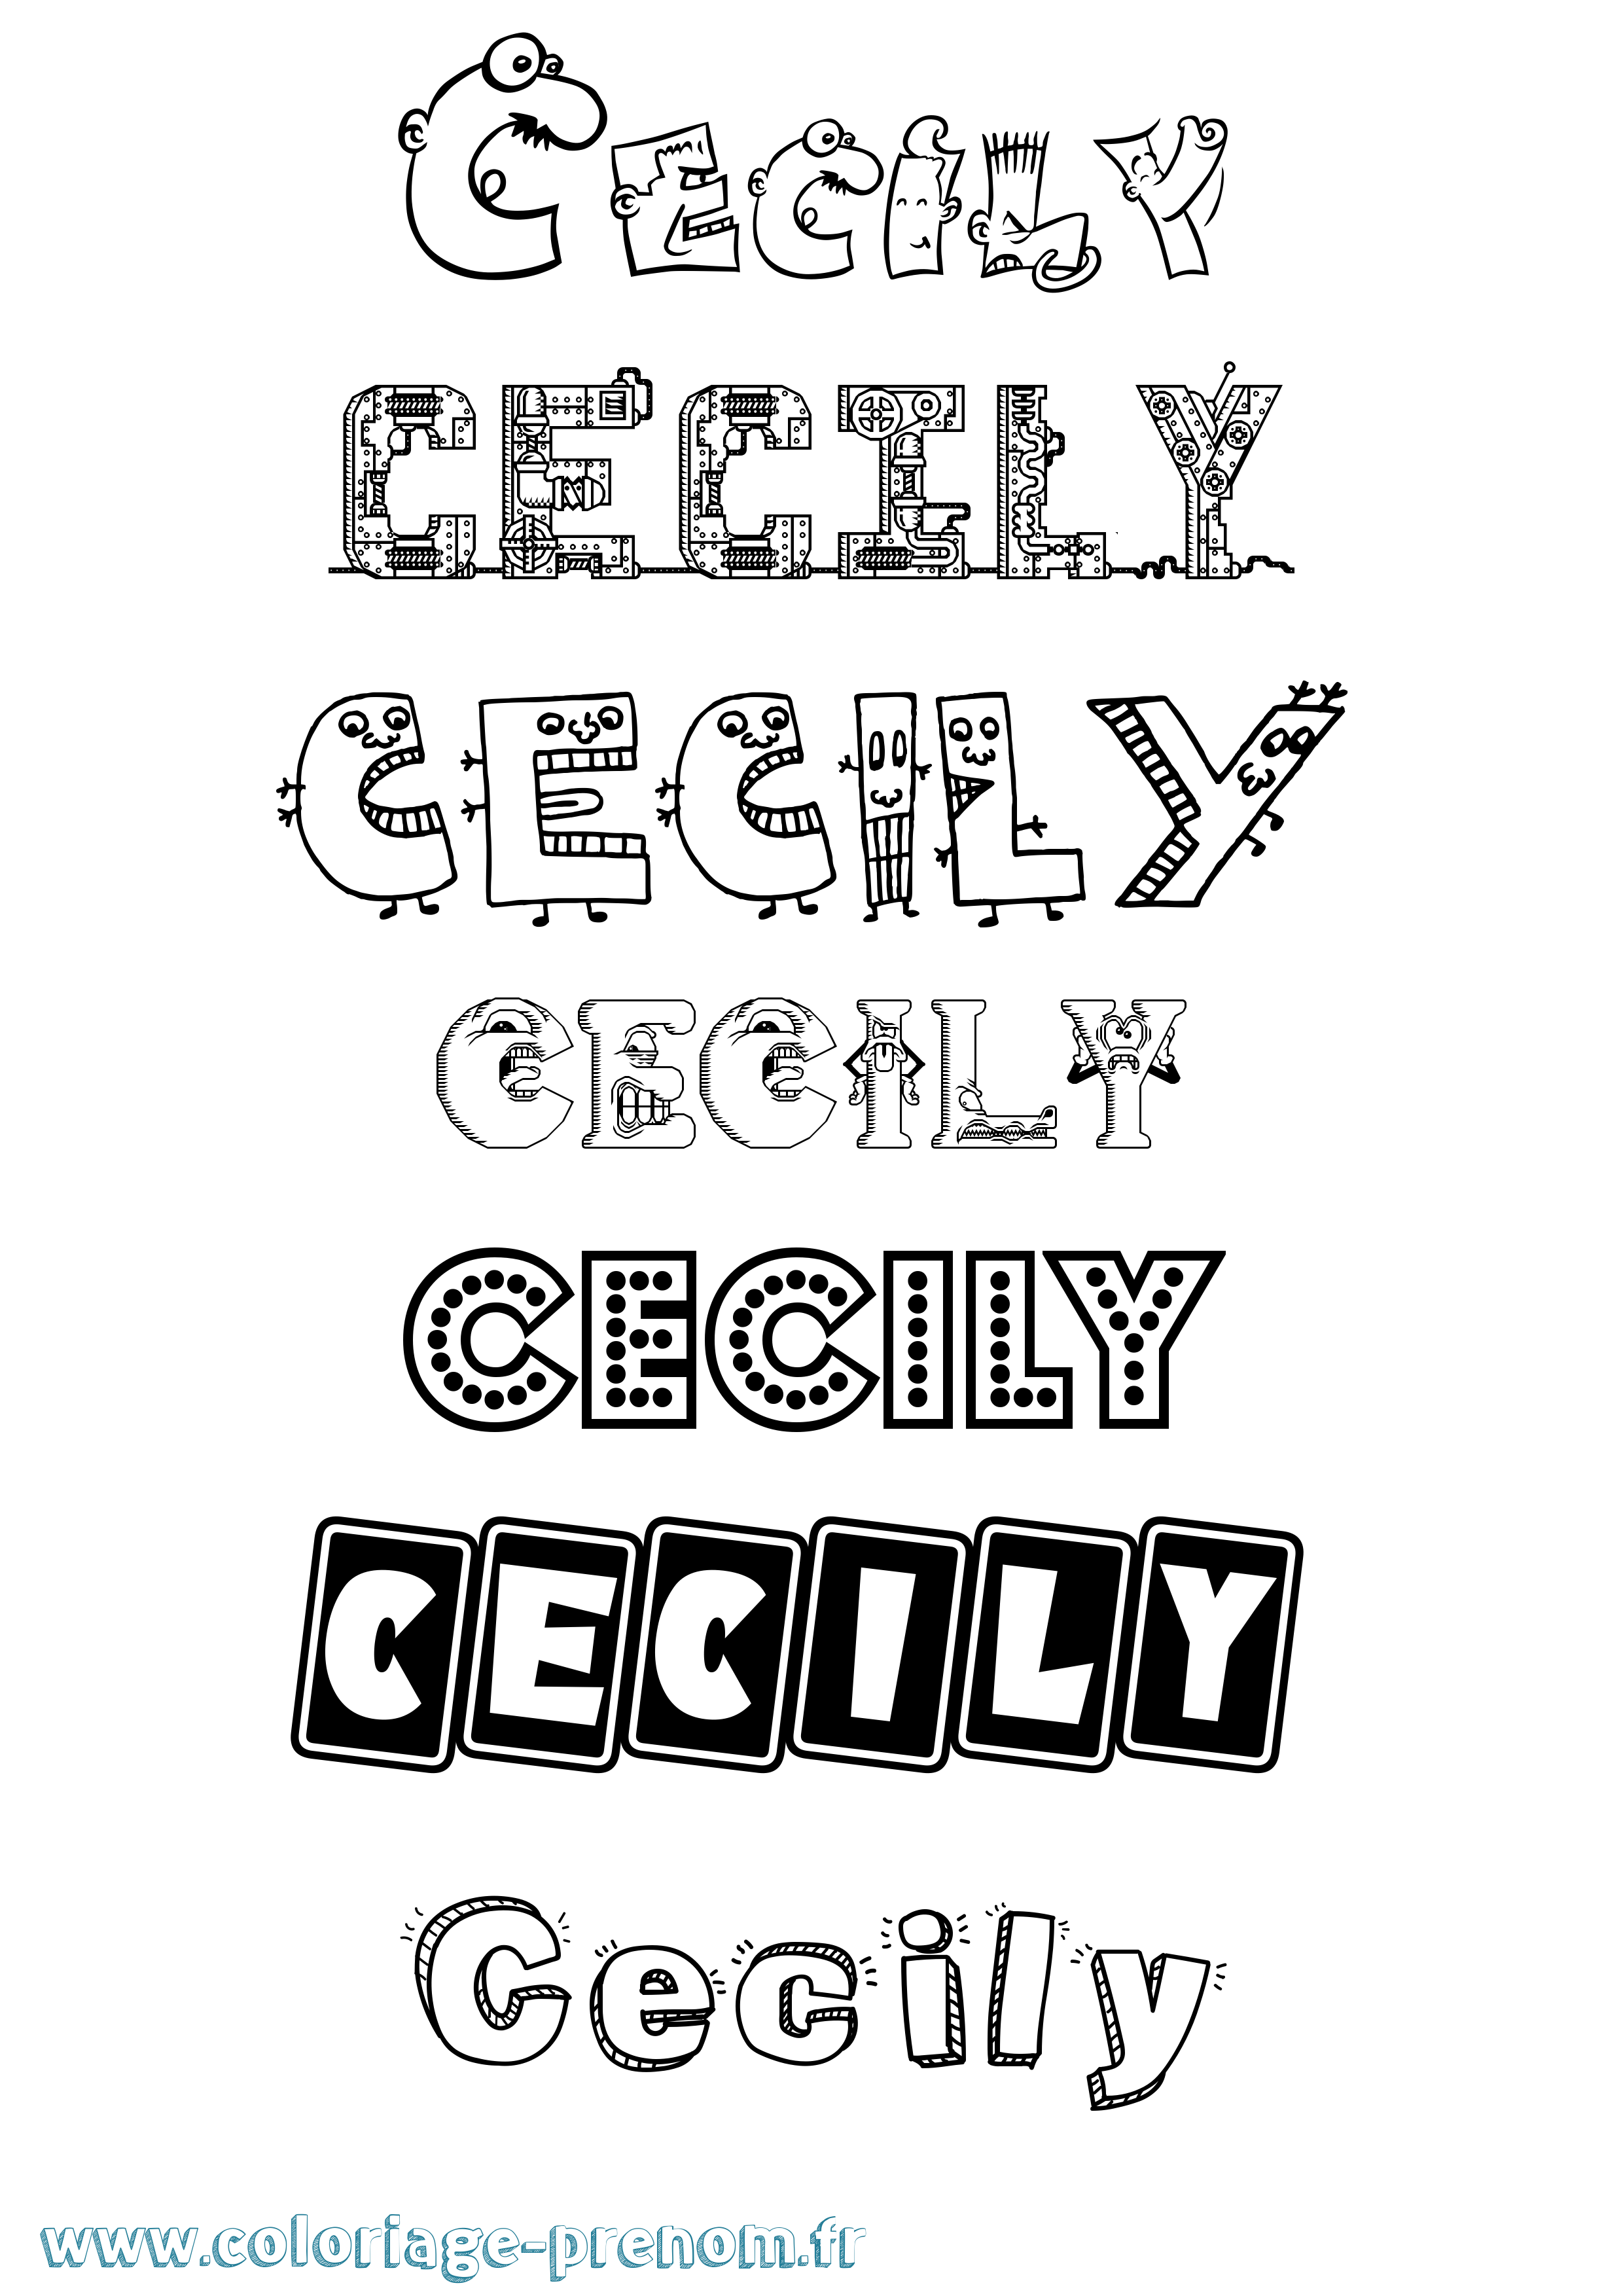 Coloriage prénom Cecily Fun